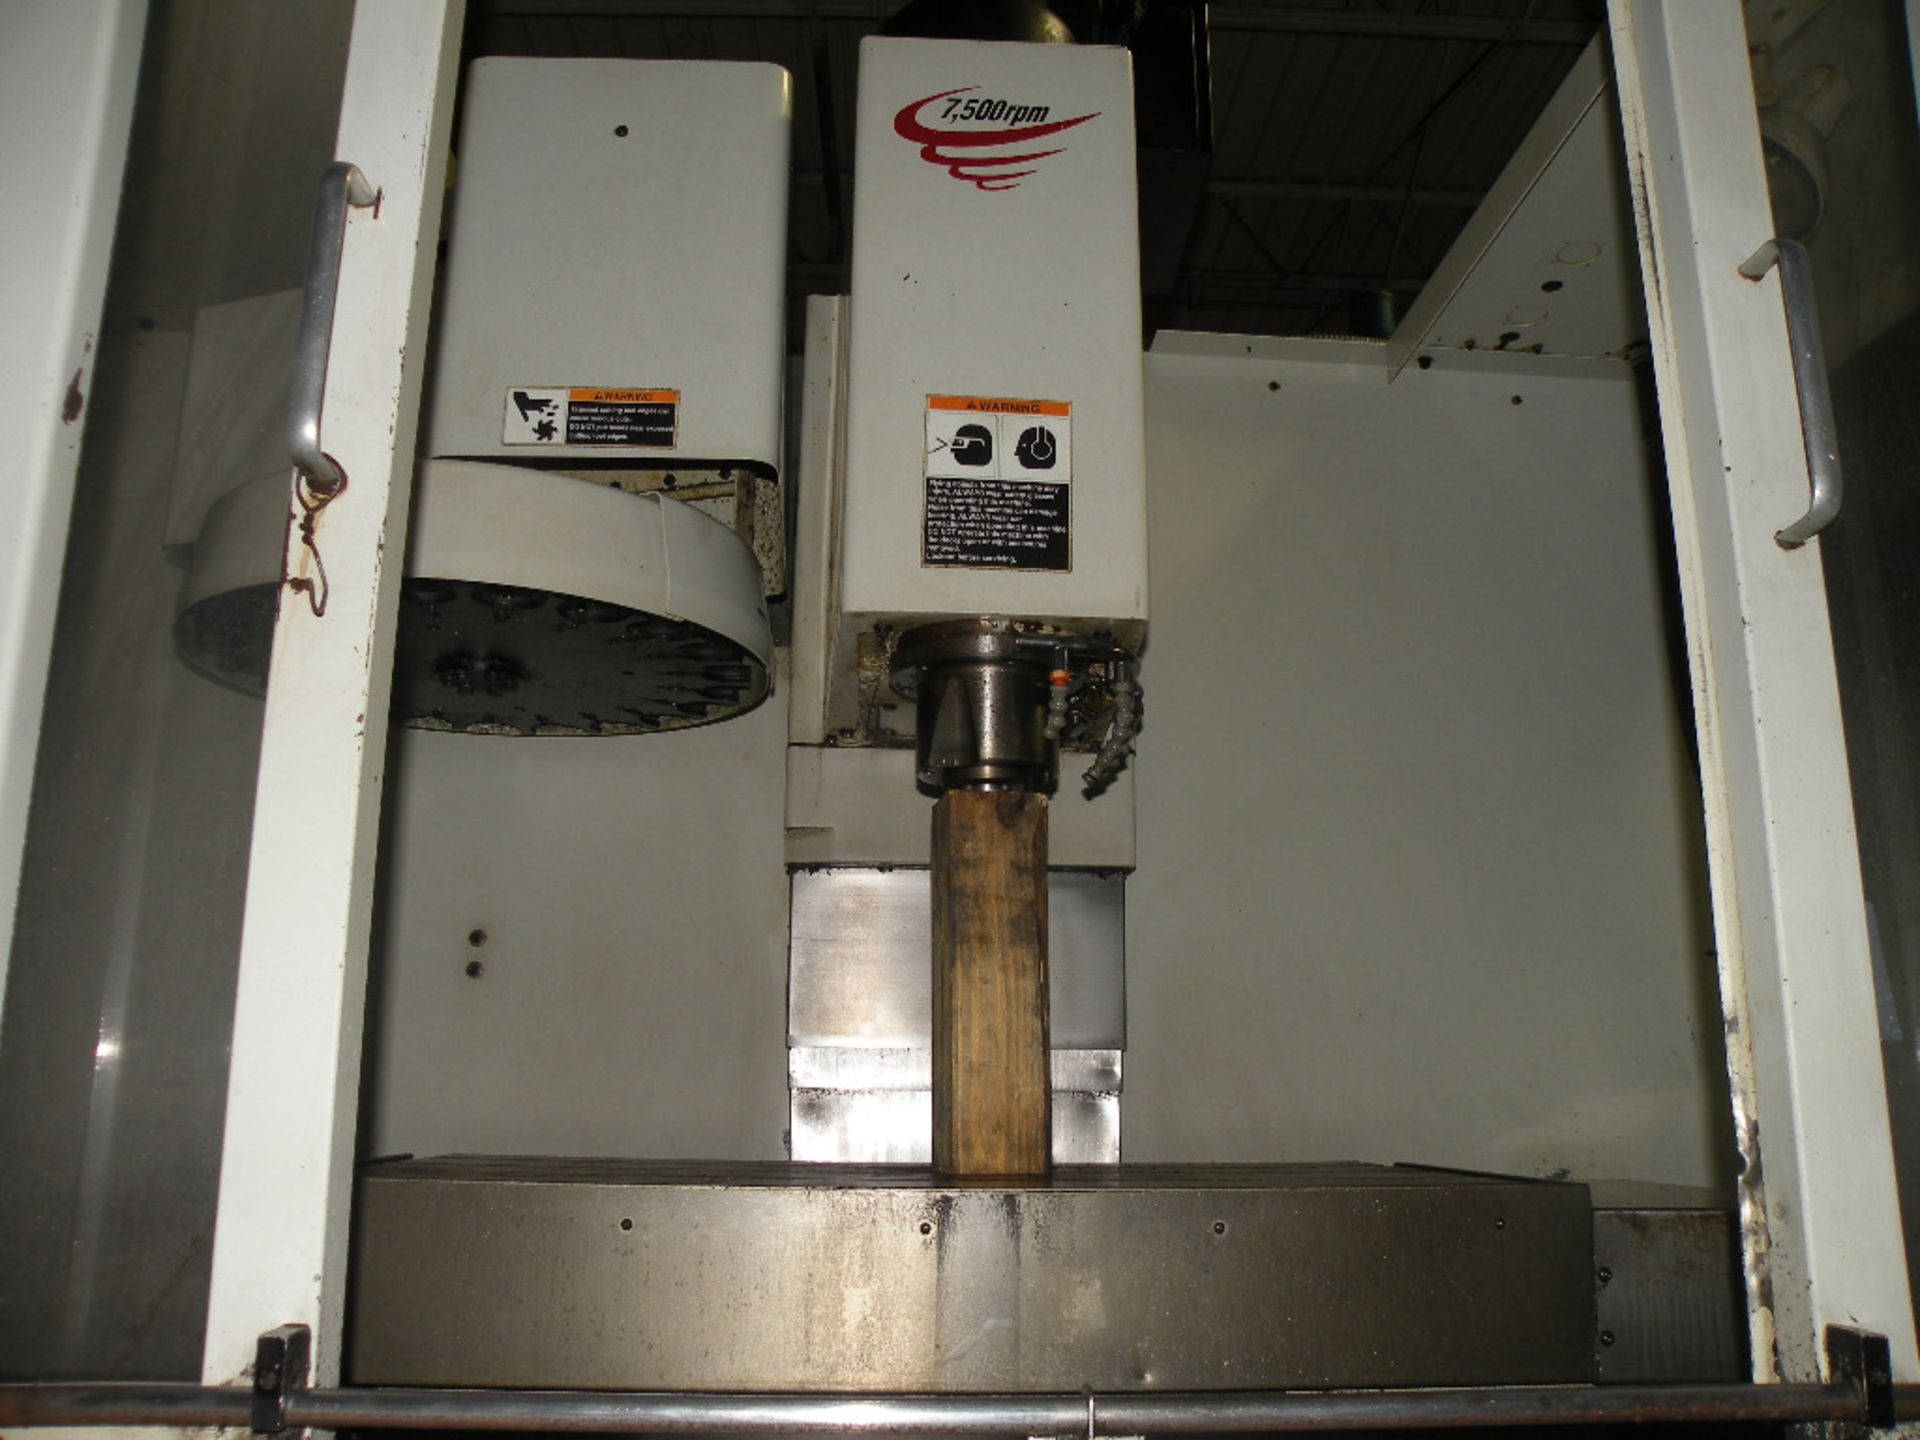 Fadal 3016L Vert. Maching Ctr: 1999, Mdl 904-1L, 7500 RPM (Free Loading) (Union City, TN) - Image 7 of 13